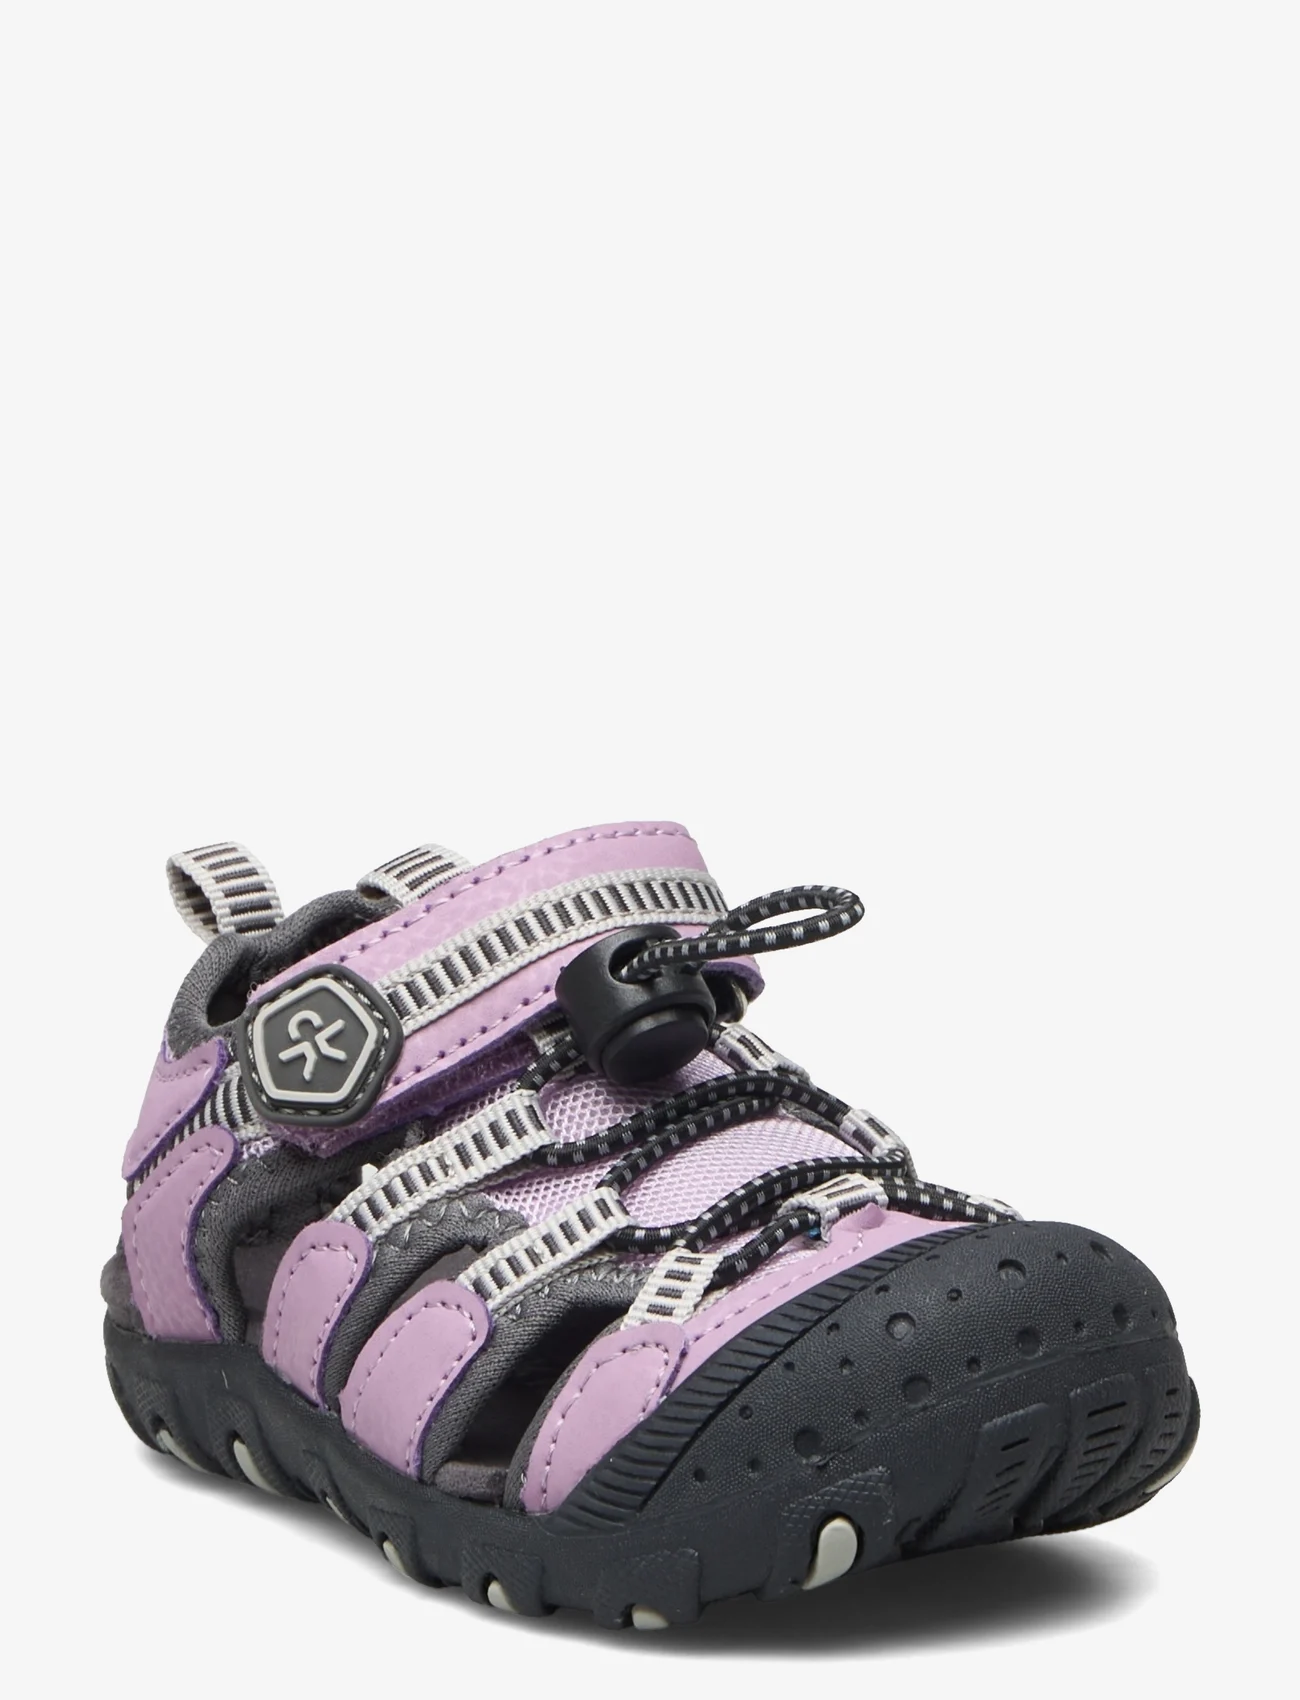 Color Kids - Sandals Trekking W. Toe Cap - kesälöytöjä - lavender mist - 0